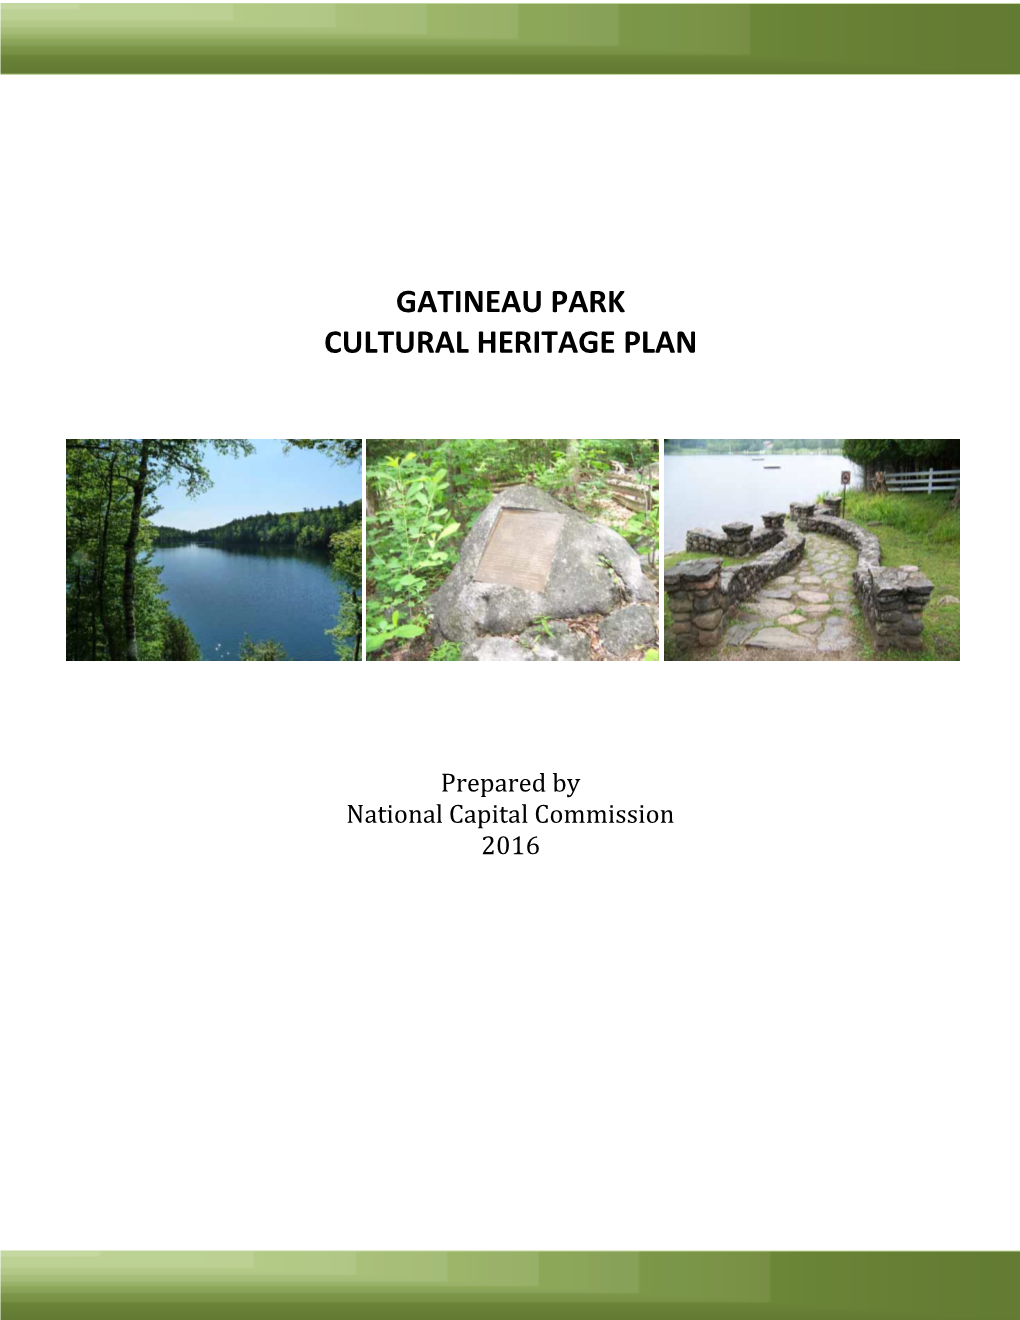 Gatineau Park Cultural Heritage Plan